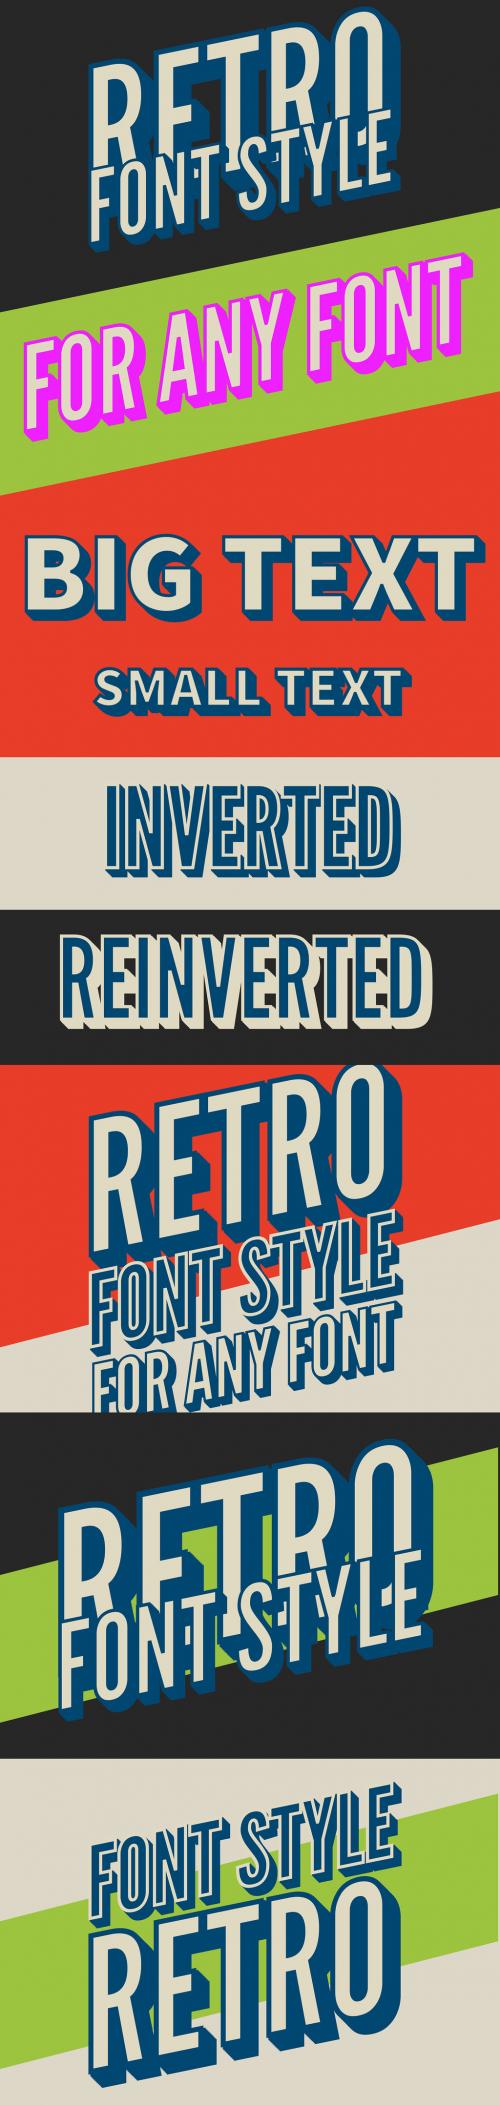 Adobe Stock - Skewed Retro 3D Text Style - 177962419